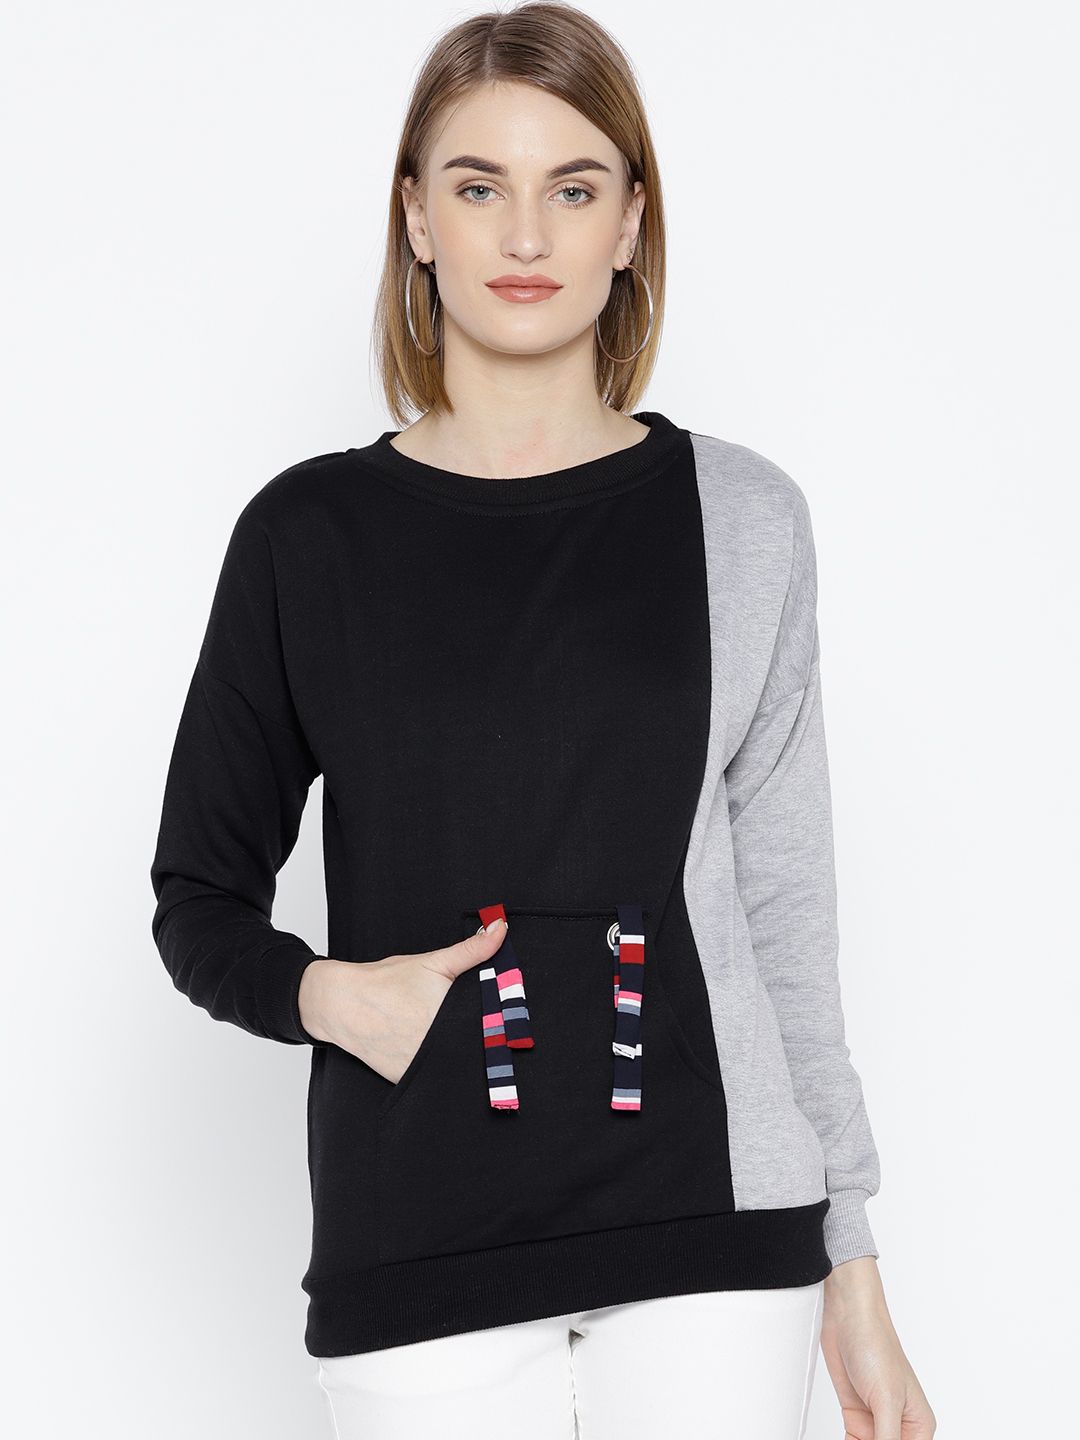 Belle Fille Women Black & Grey Melange Colourblocked Sweatshirt Price in India